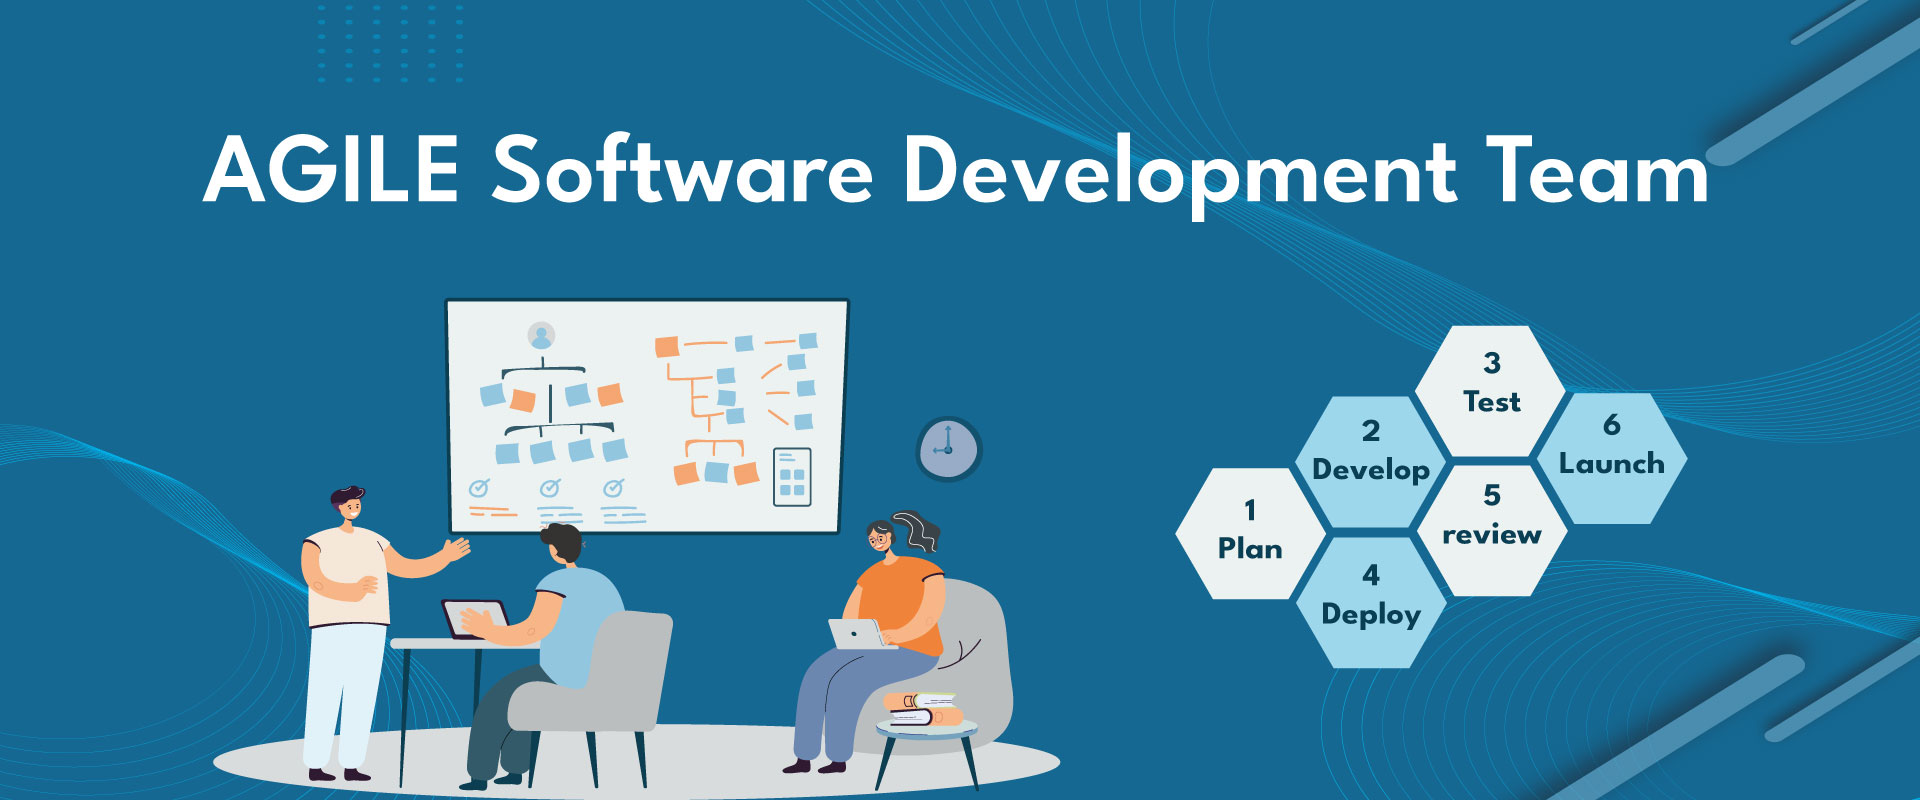 Agile-Software-Development-Team